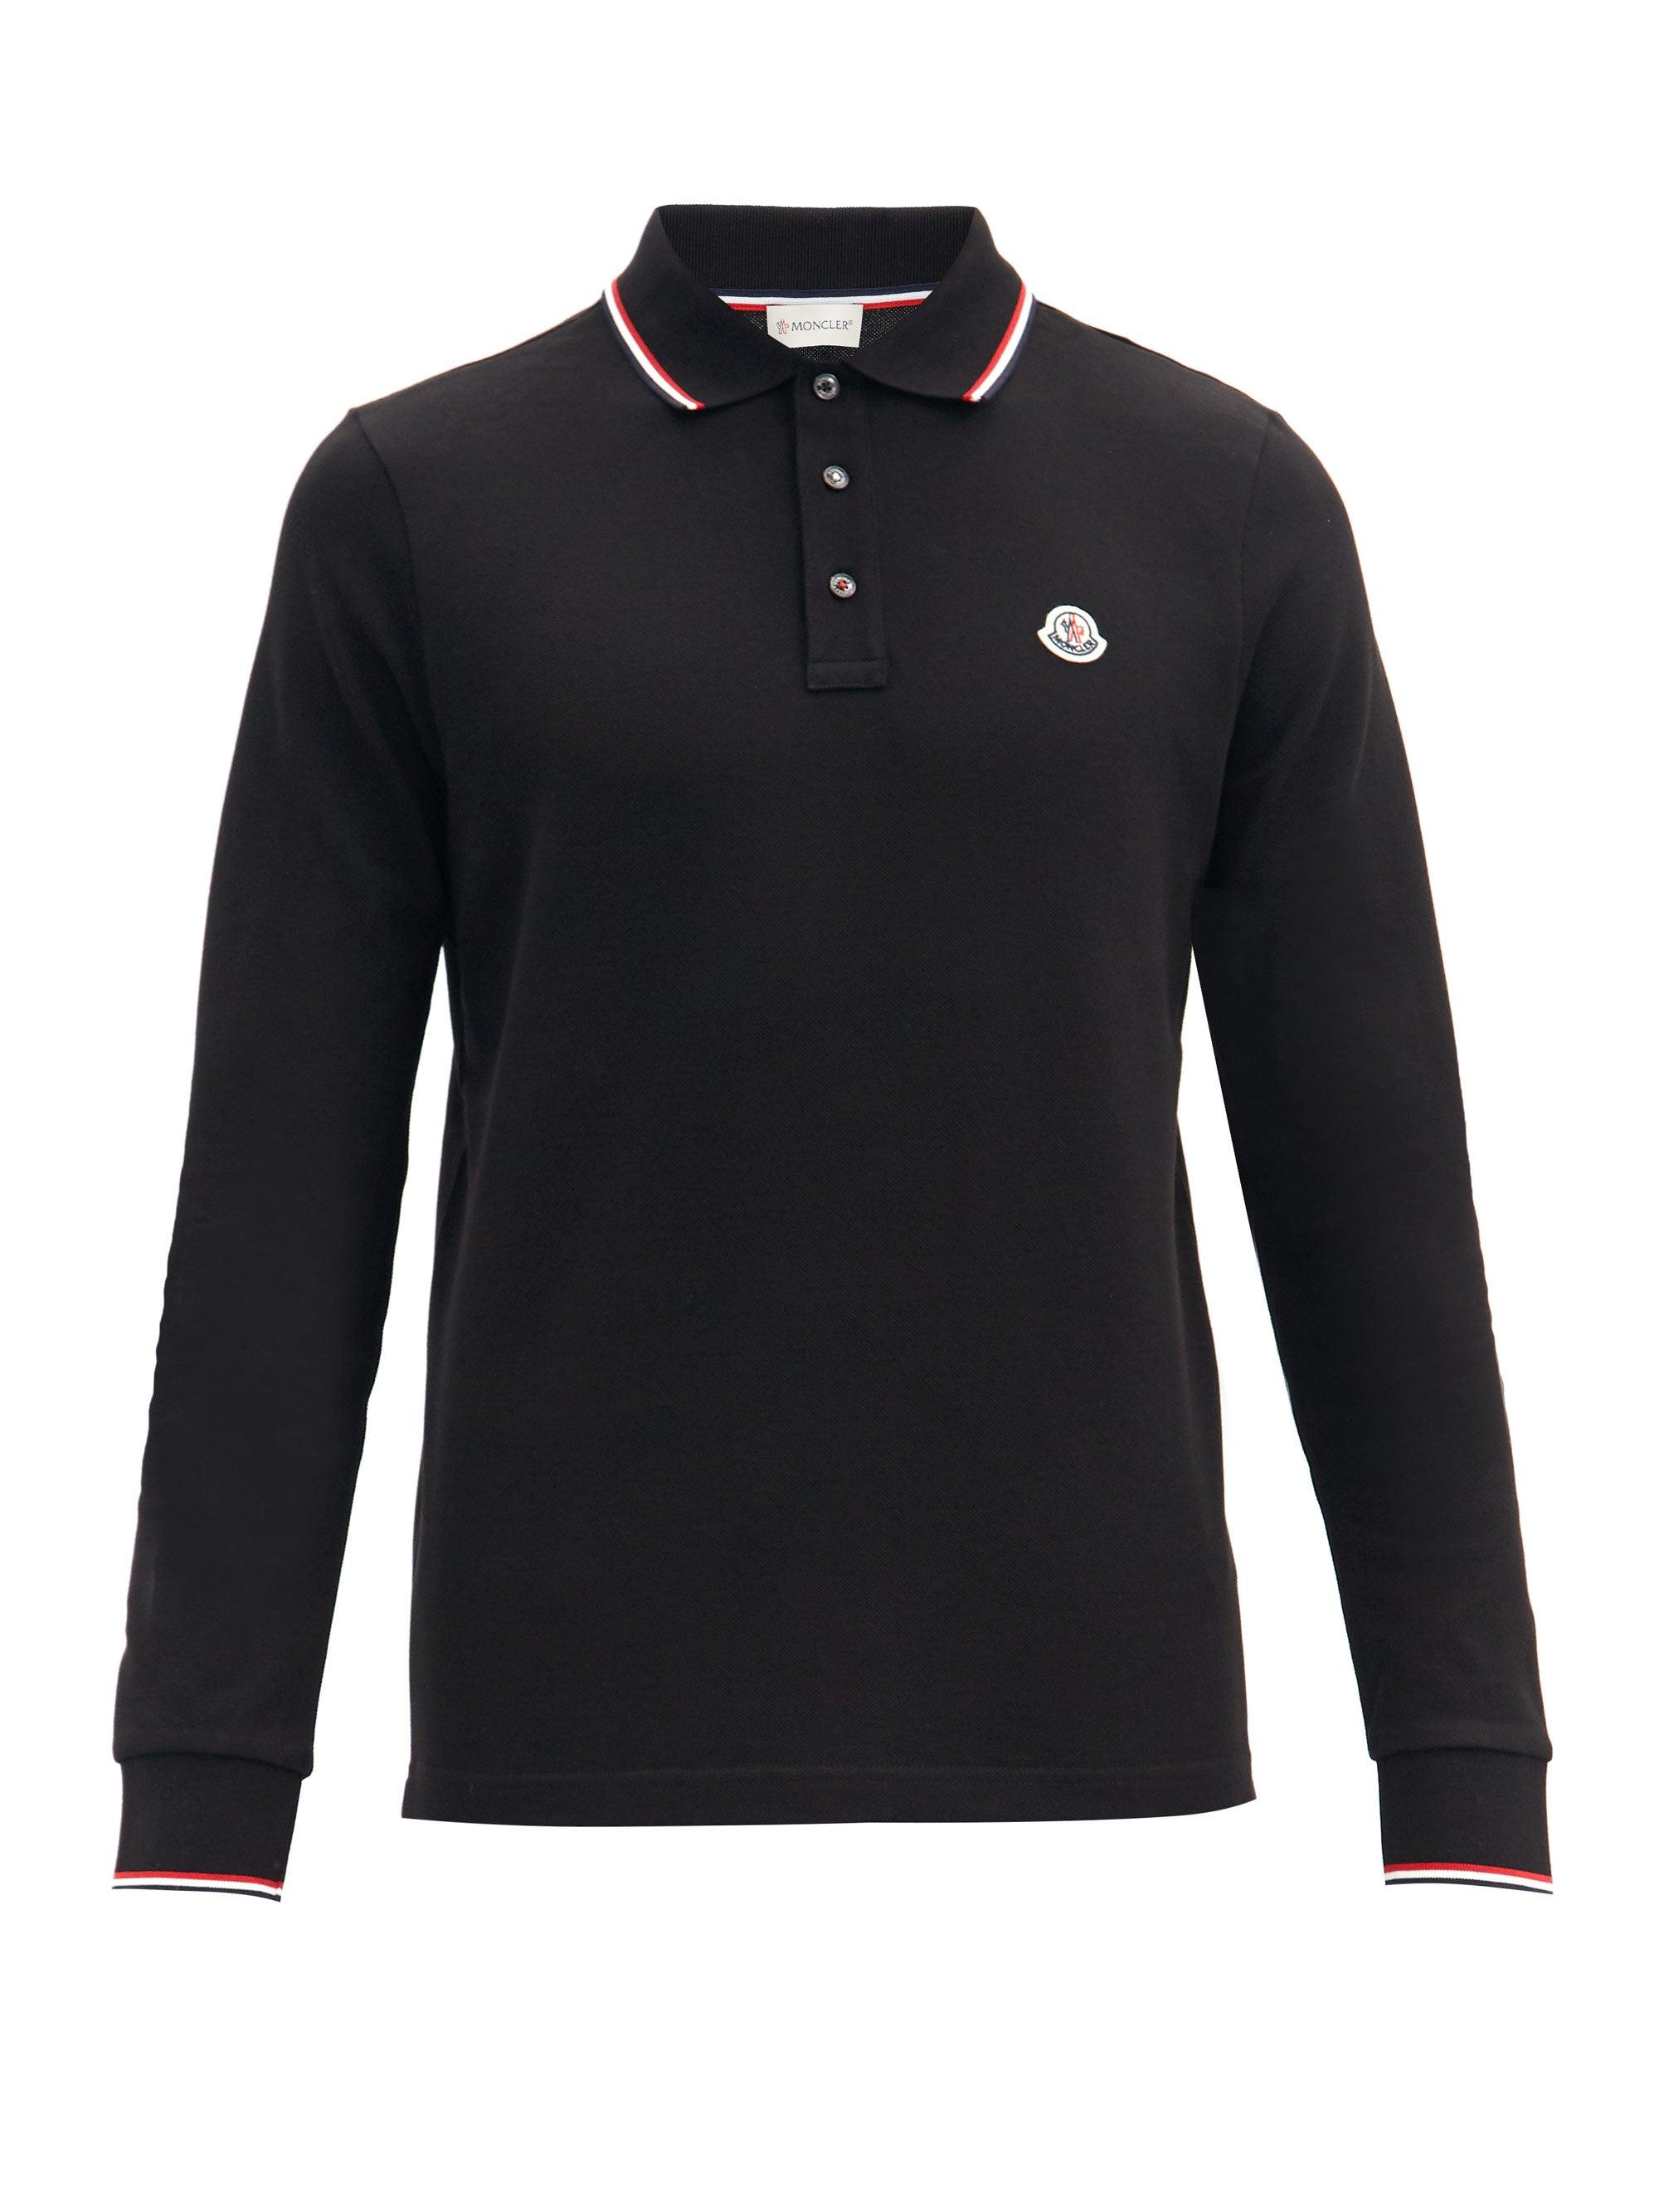 Moncler Logo Cotton-piqué Long-sleeved Polo Shirt in Black for Men - Lyst